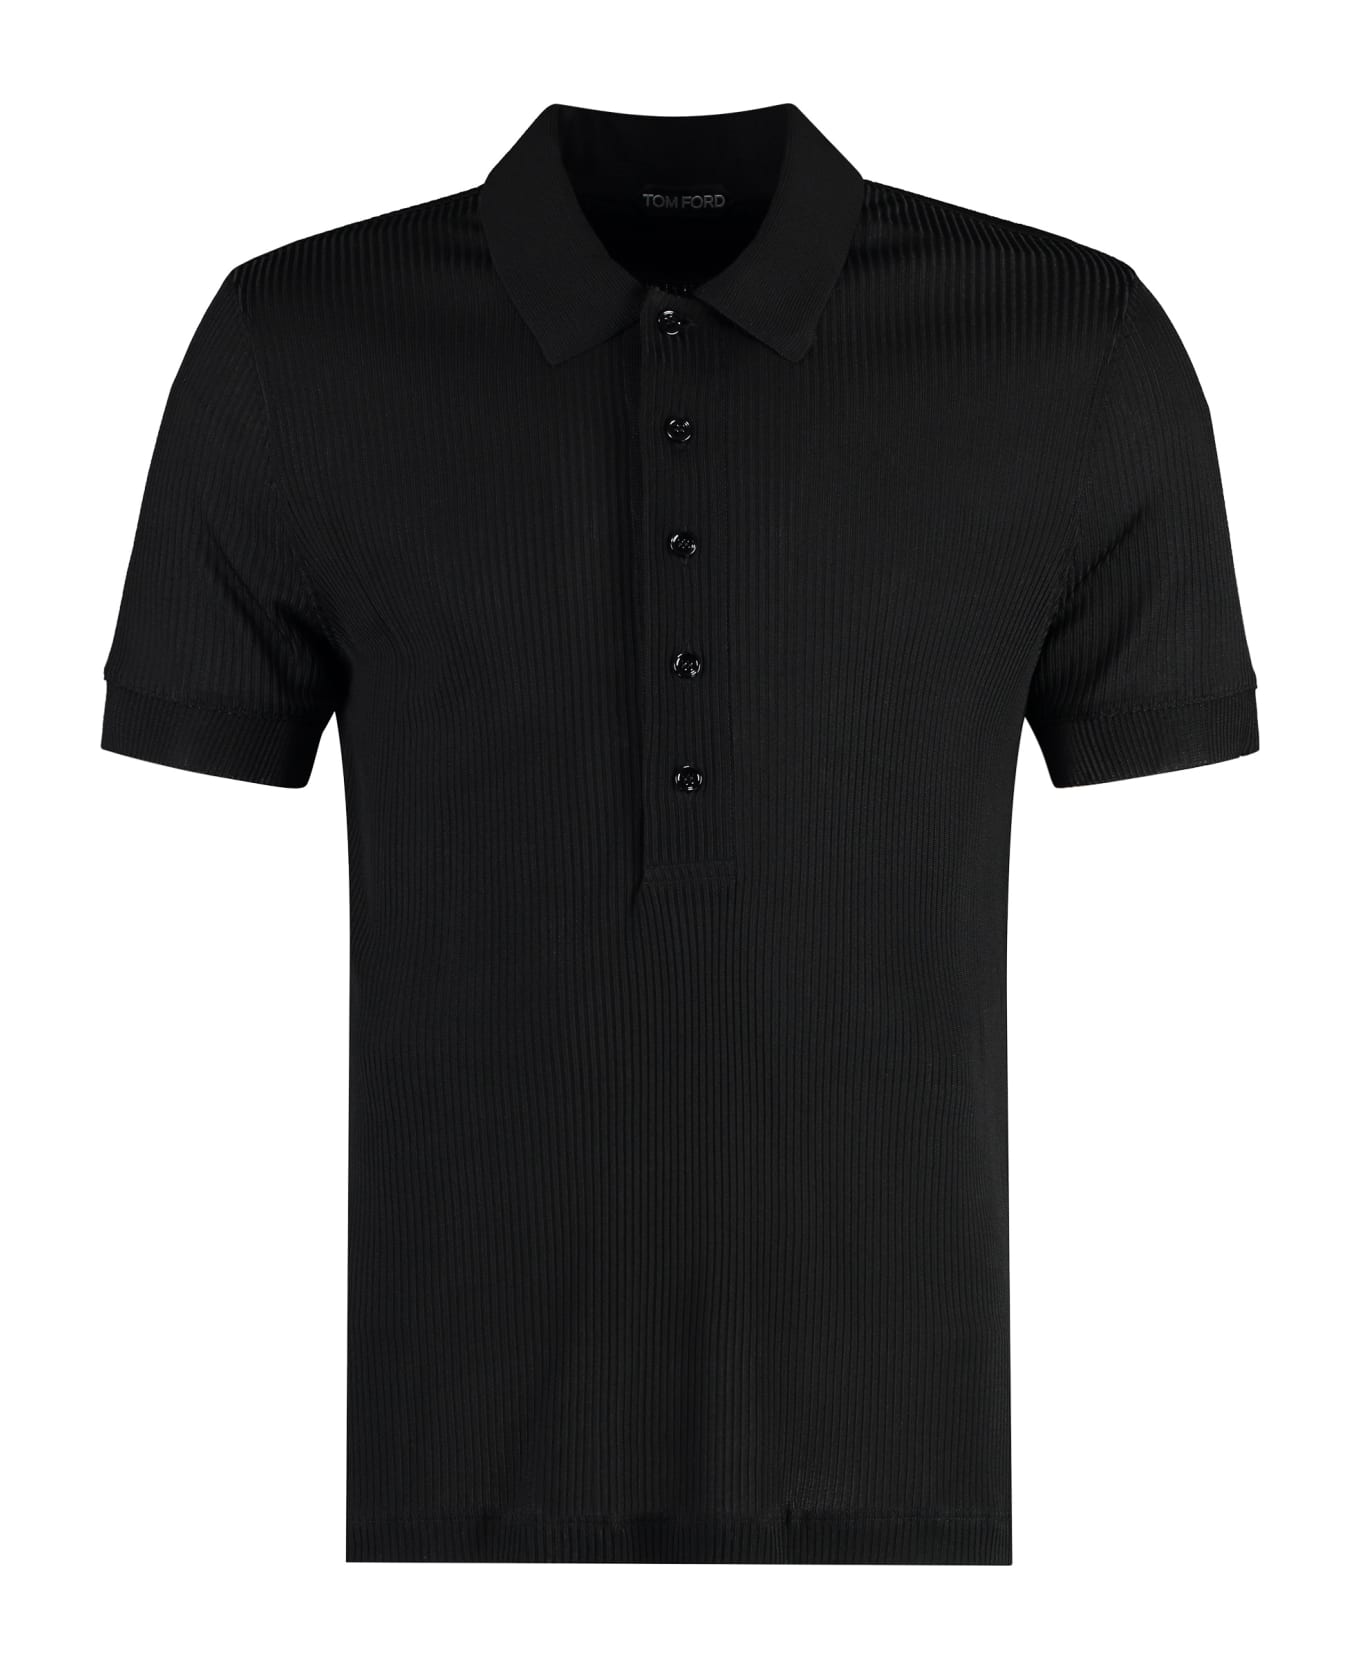 Tom Ford Ribbed Knit Polo Shirt - black ポロシャツ